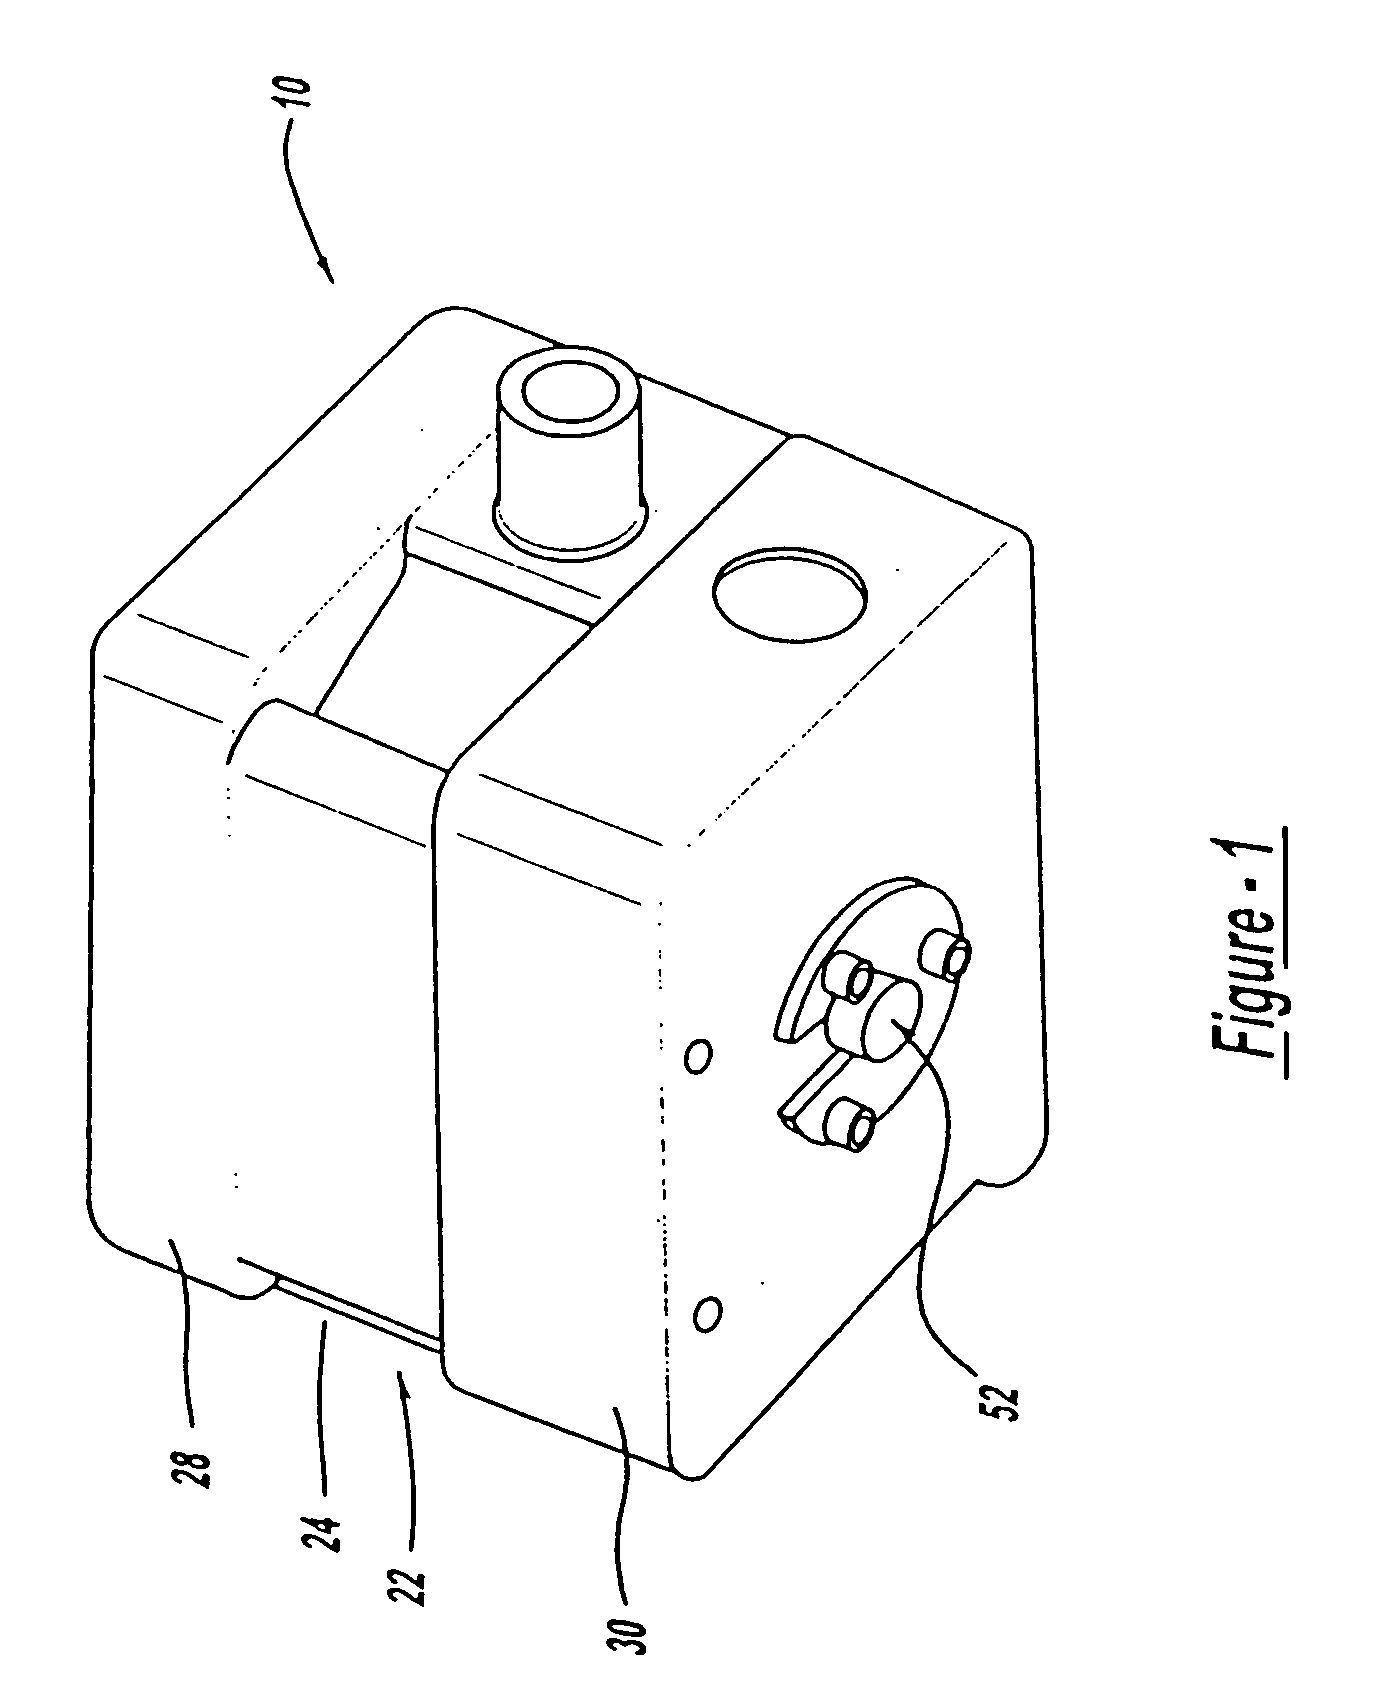 Variable displacement vane pump with variable target reguator